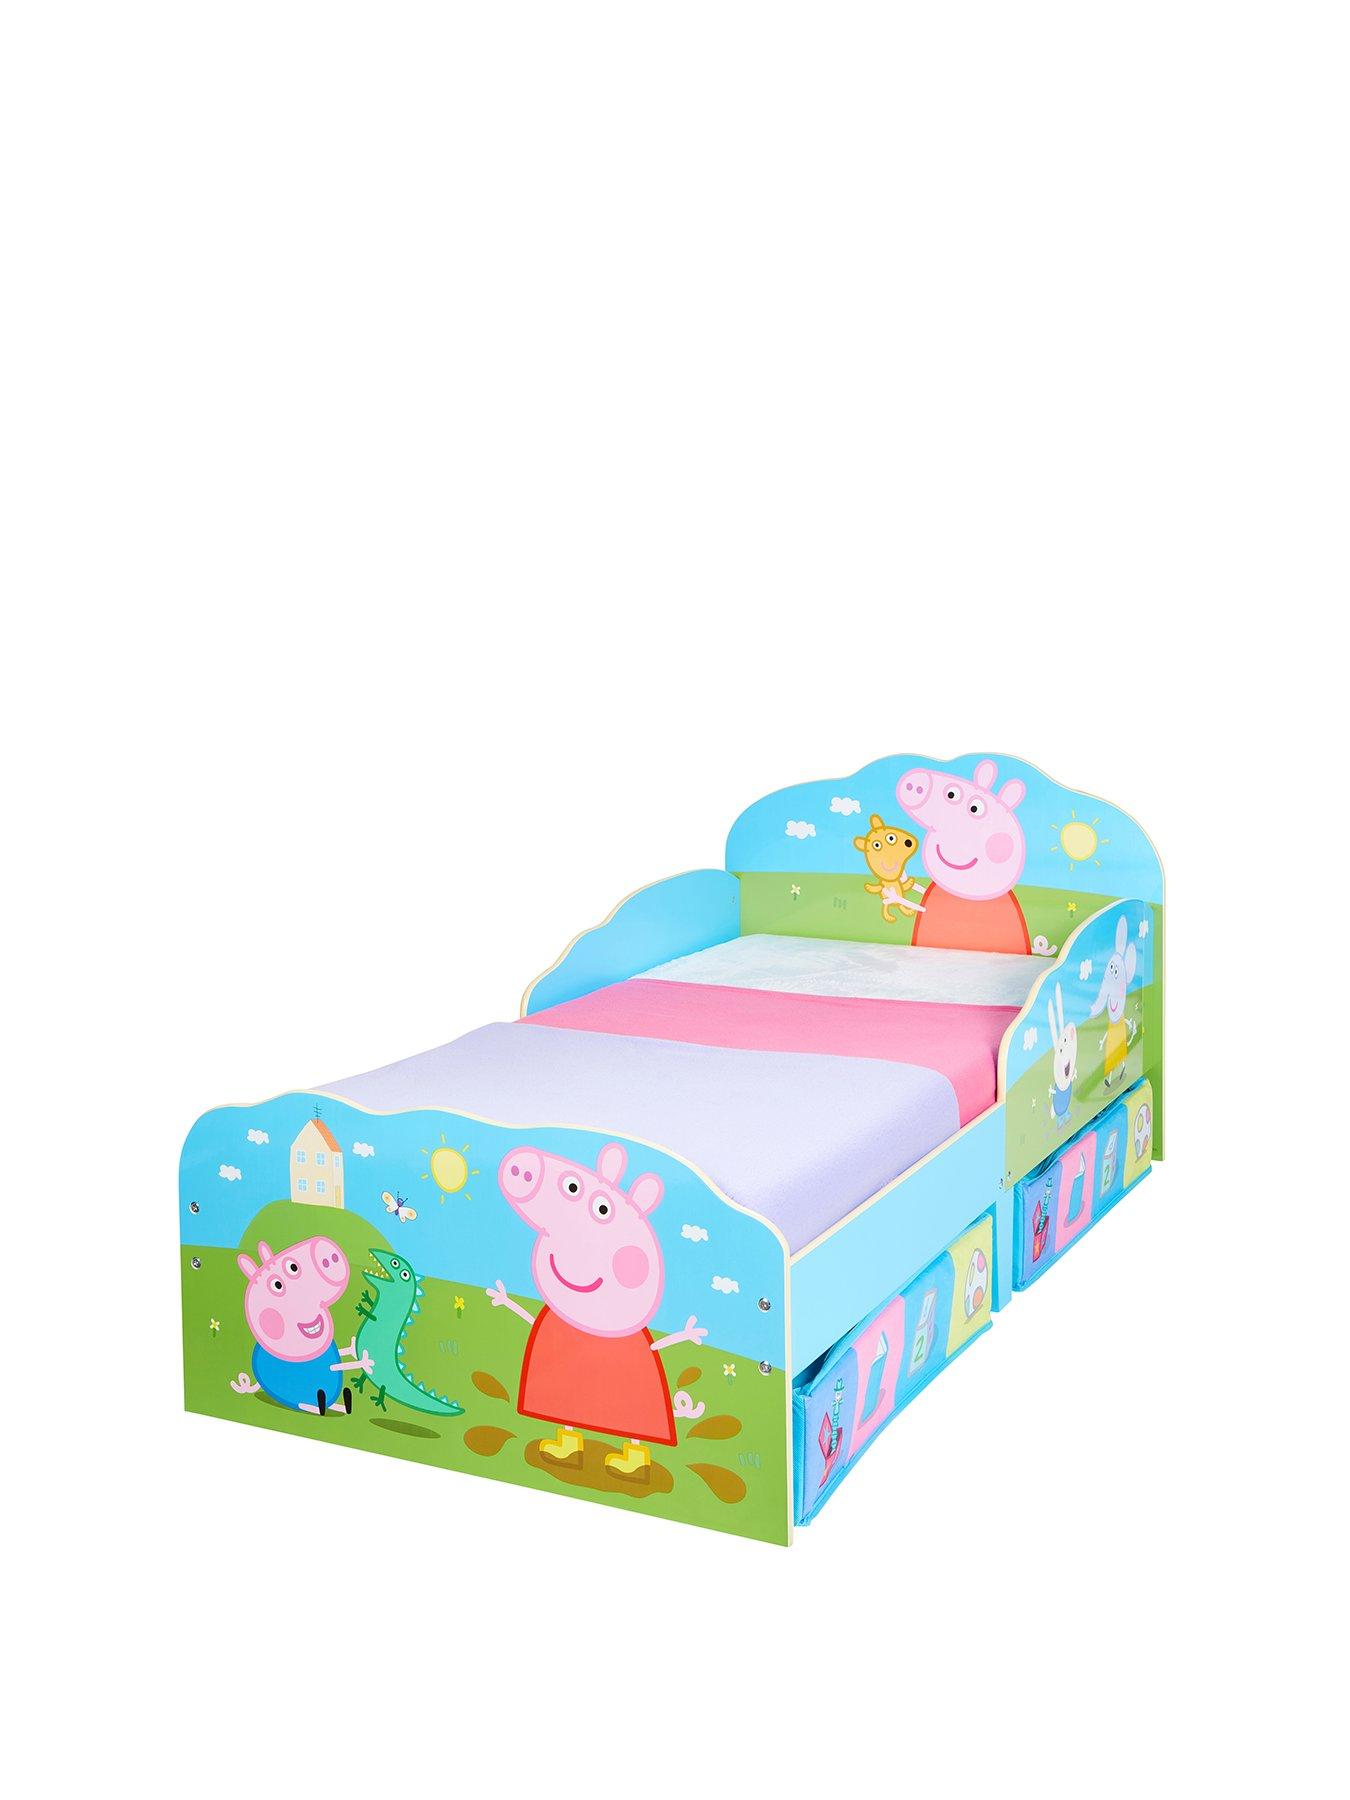 Peppa Pig Bedroom Furniture Child Baby Www